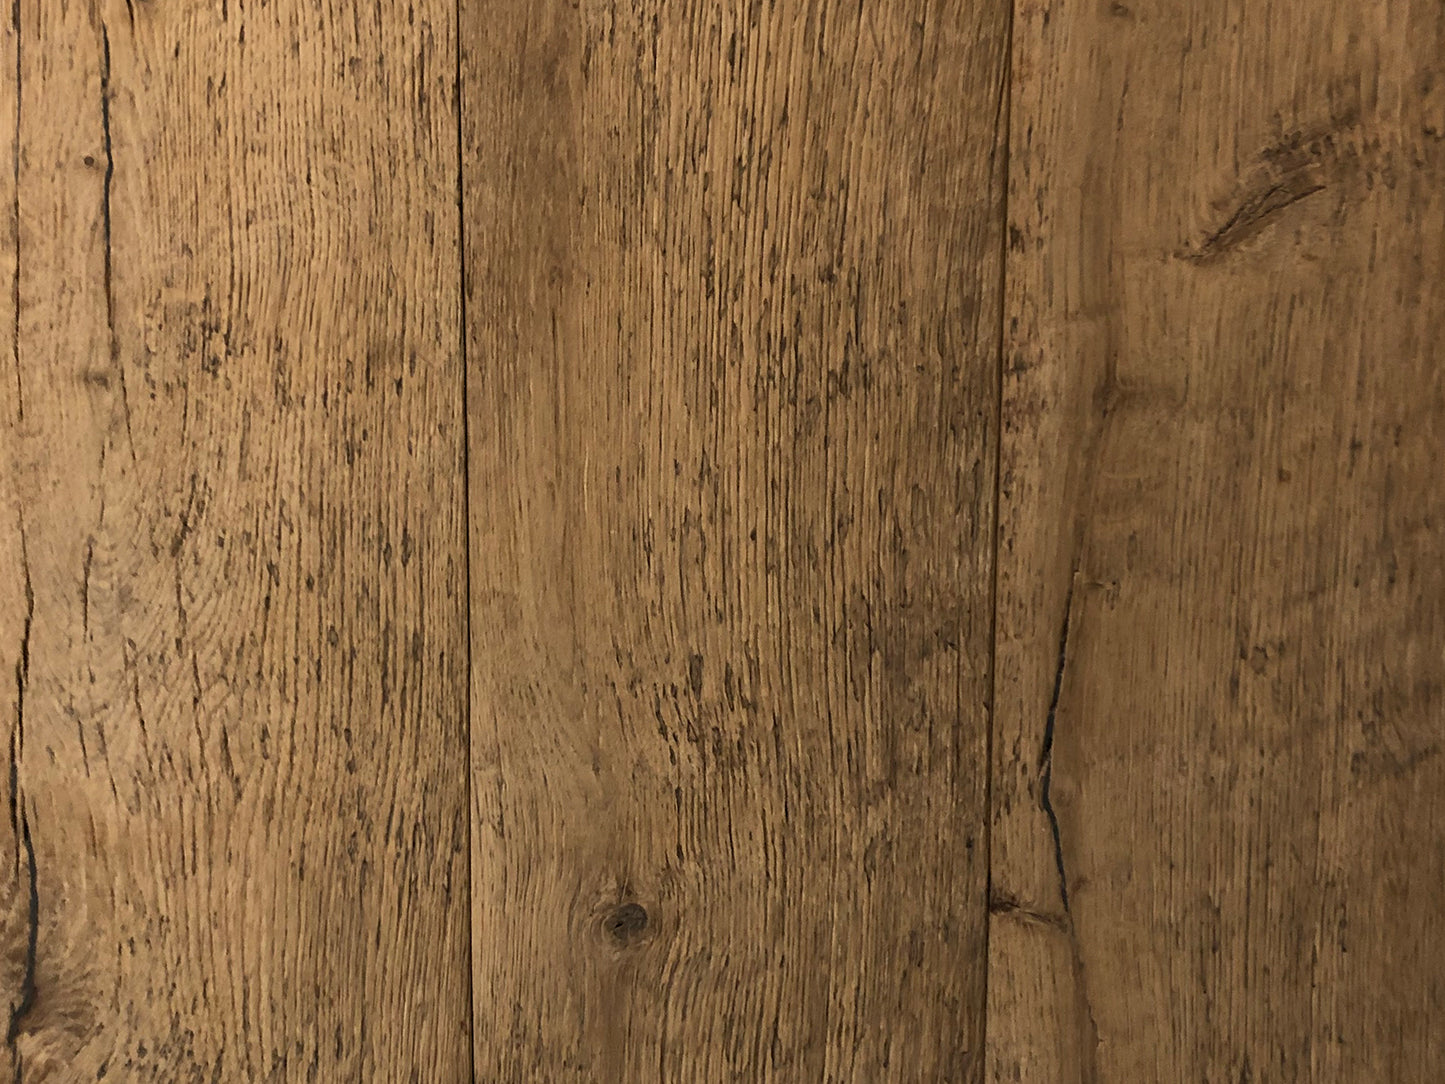 Reclaimed Ranch Oak Flooring | Reclaimed Wood Flooring